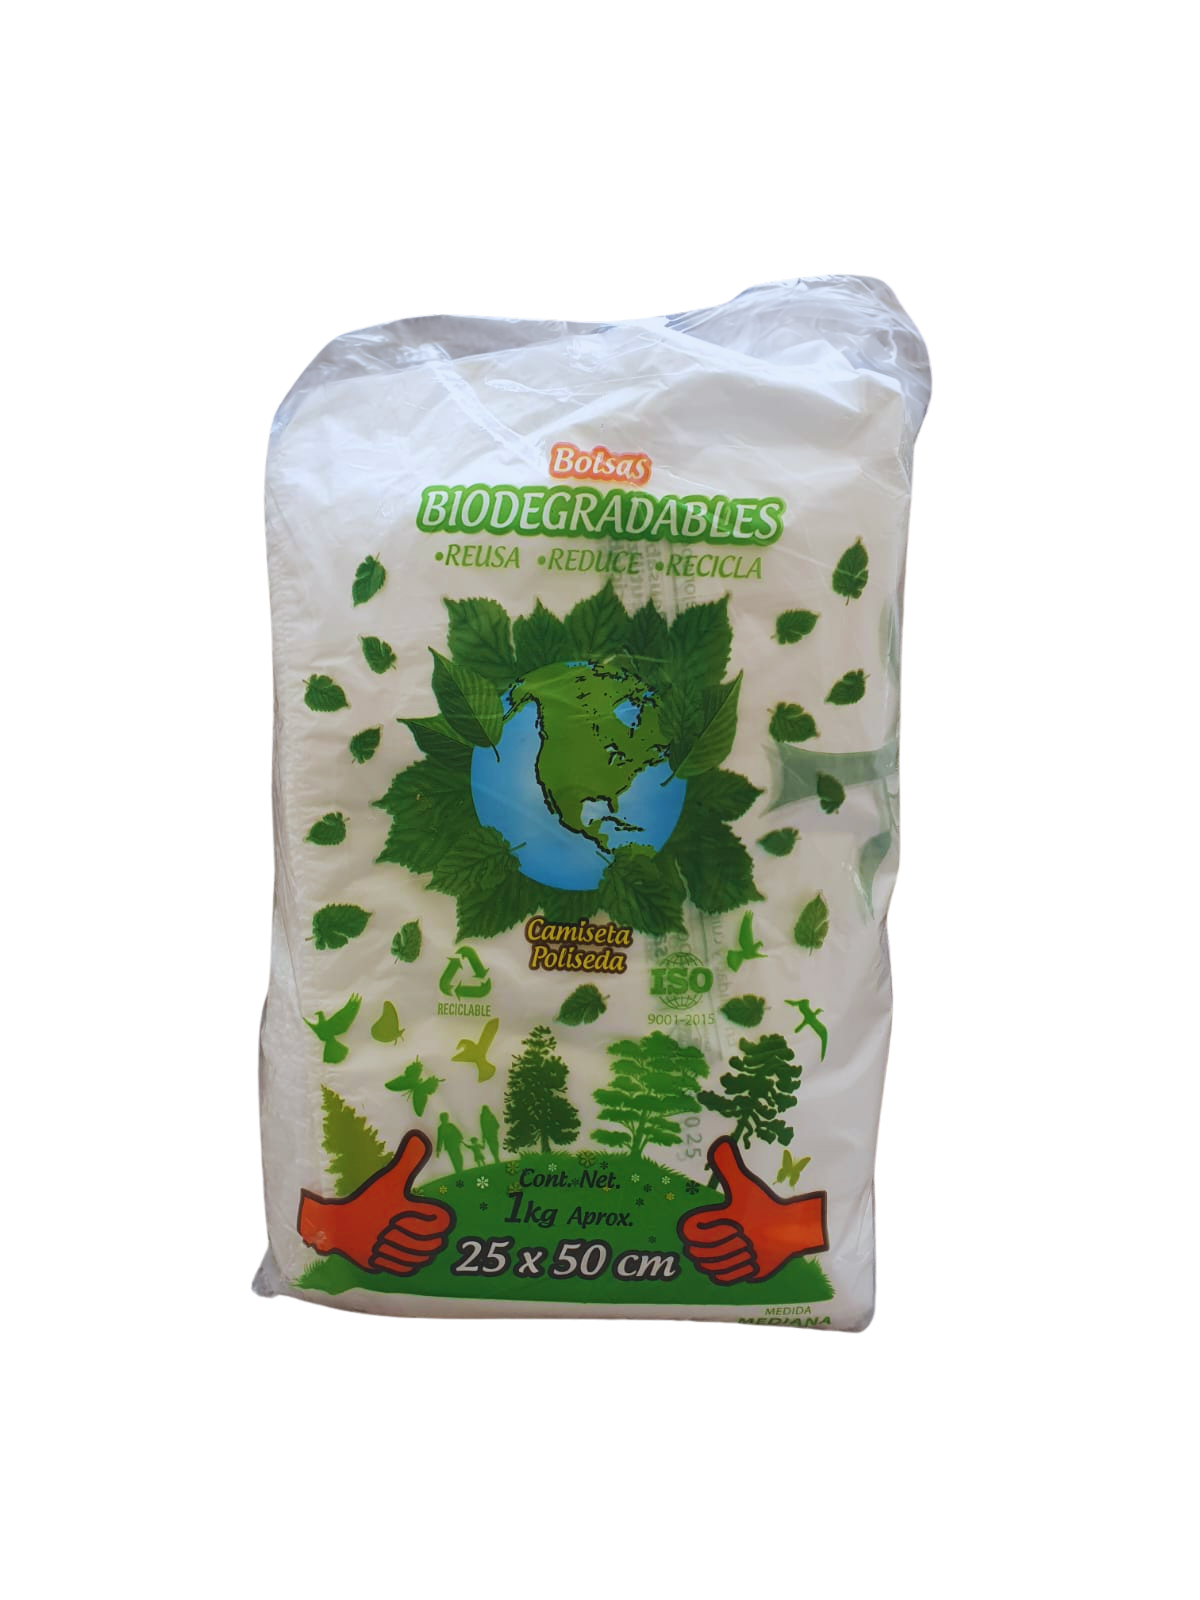 Bolsa de camiseta blanca poliseda biodegradable con diseño No. 3 (30x60 cm) Funsam de 1 kg